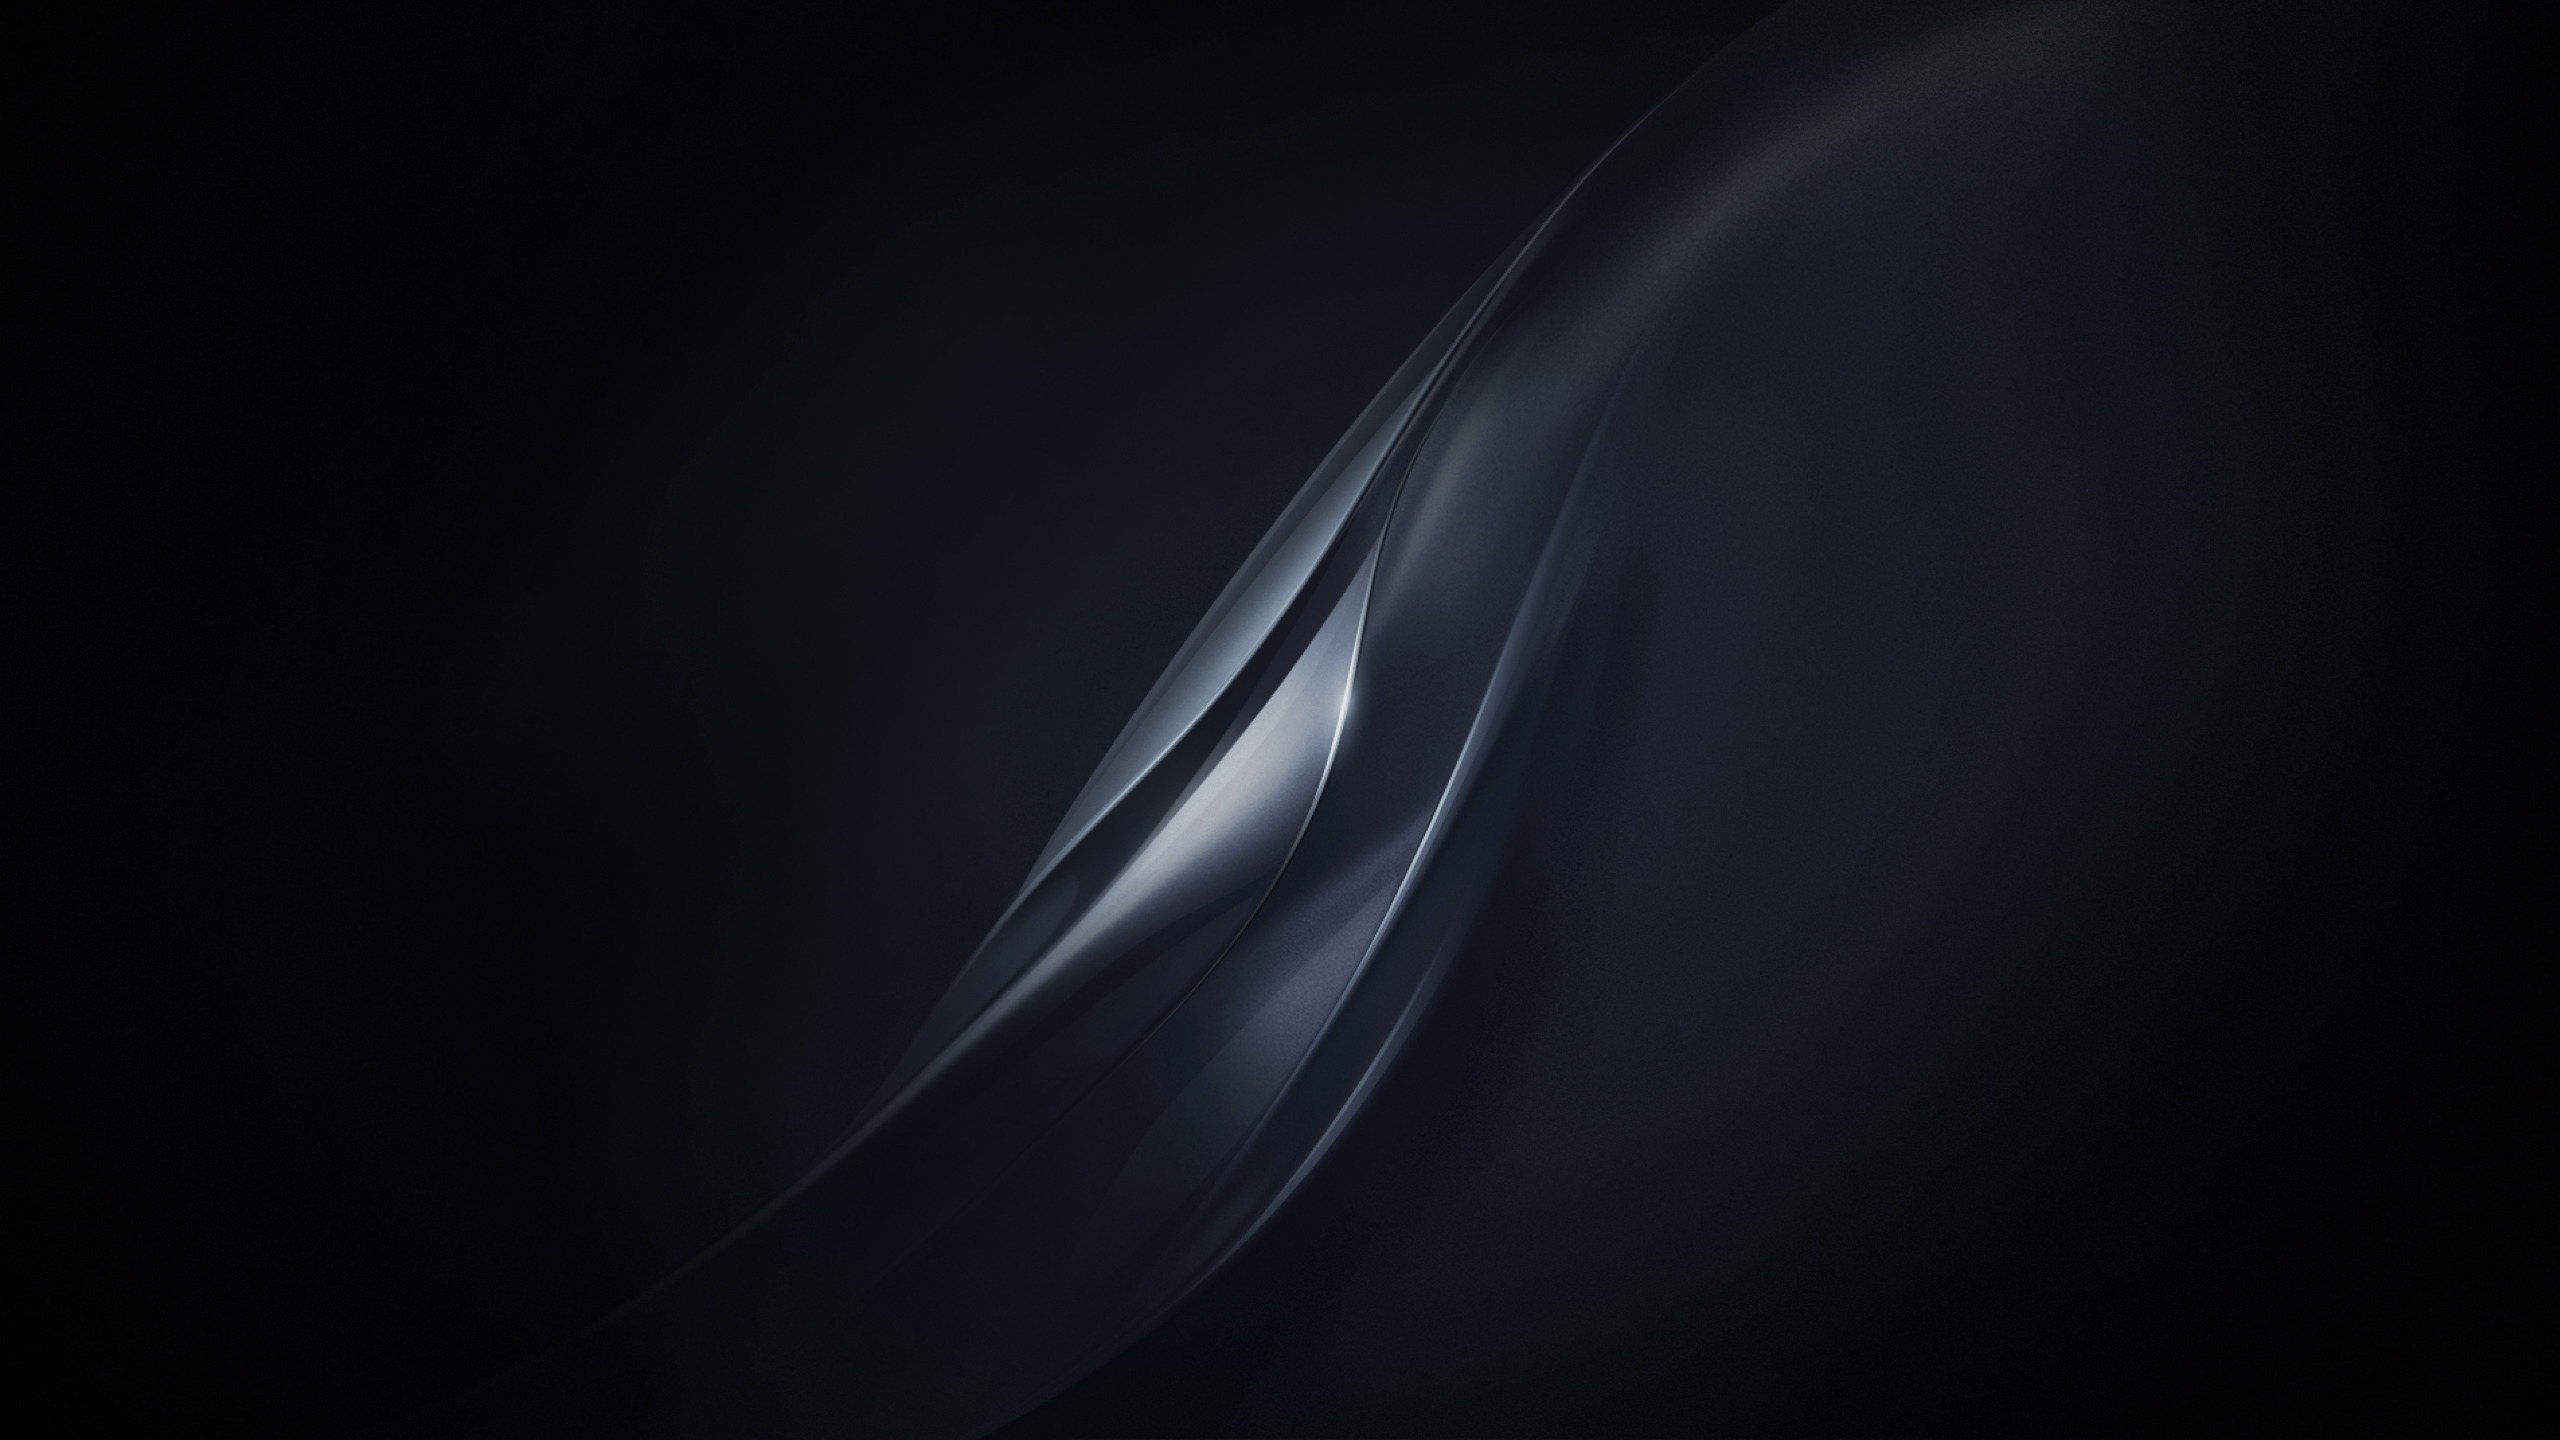 Download wallpaper 2560x1440 dark, black curve, abstract, gome u7